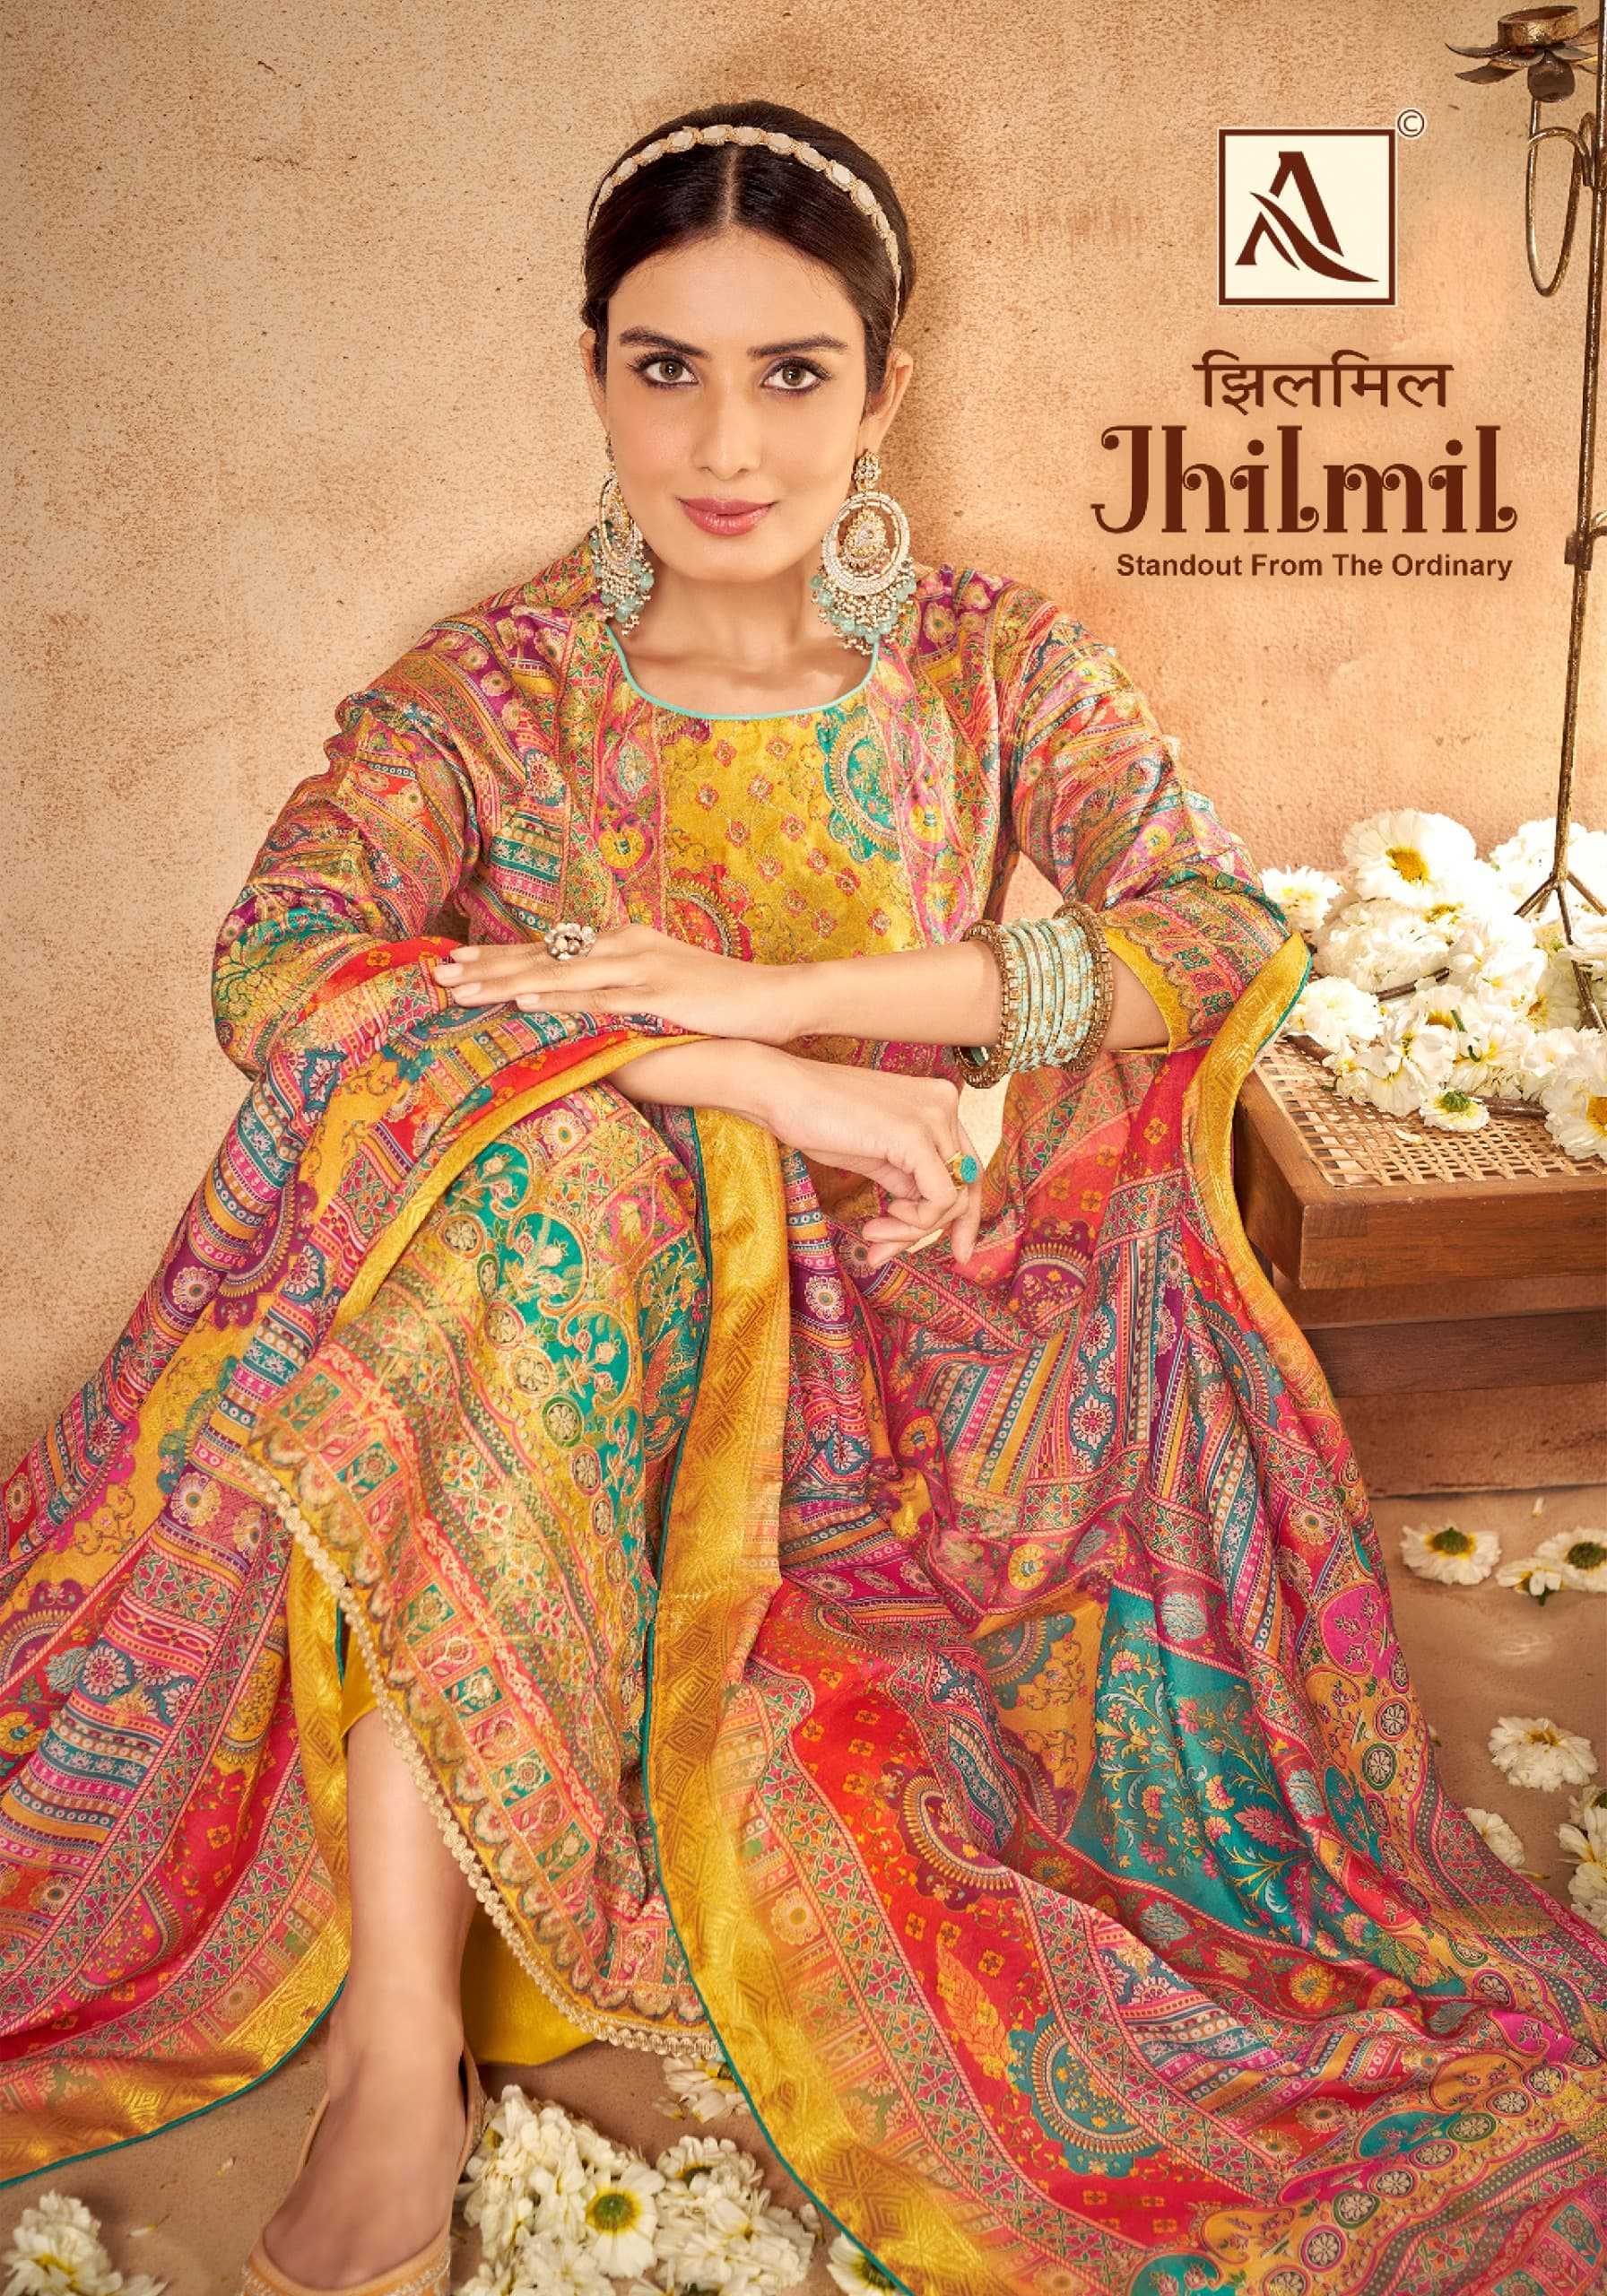 jhilmil by alok suit new trendy premium soft maslin pakistani salwar kameez